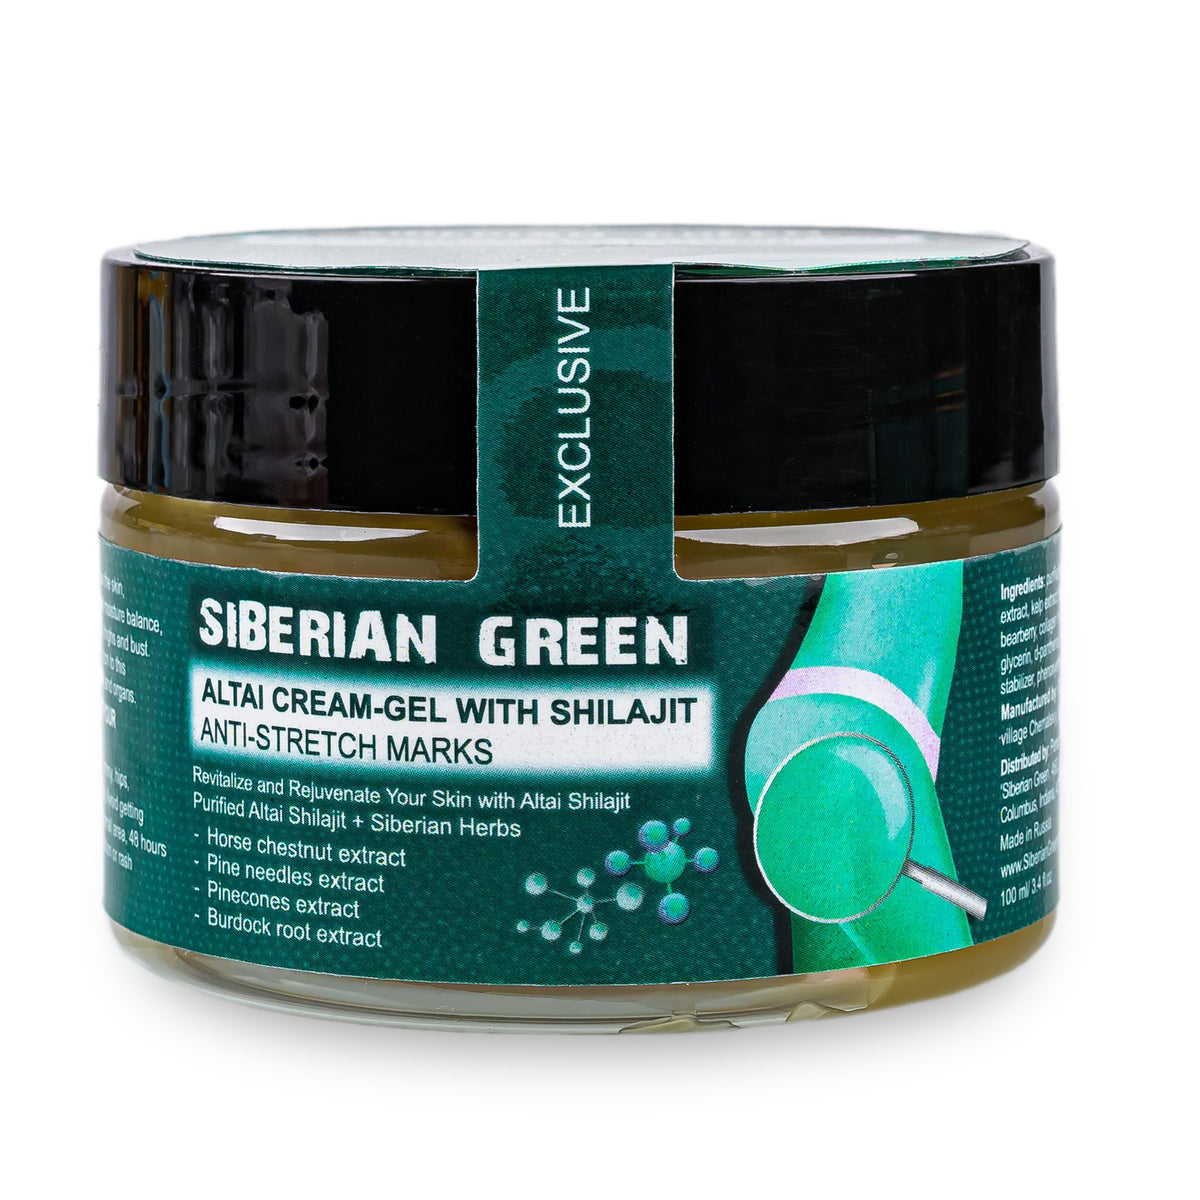 Altai Cream-Gel “Anti-Stretch Marks” with Shilajit and Siberian Herbs 100ml